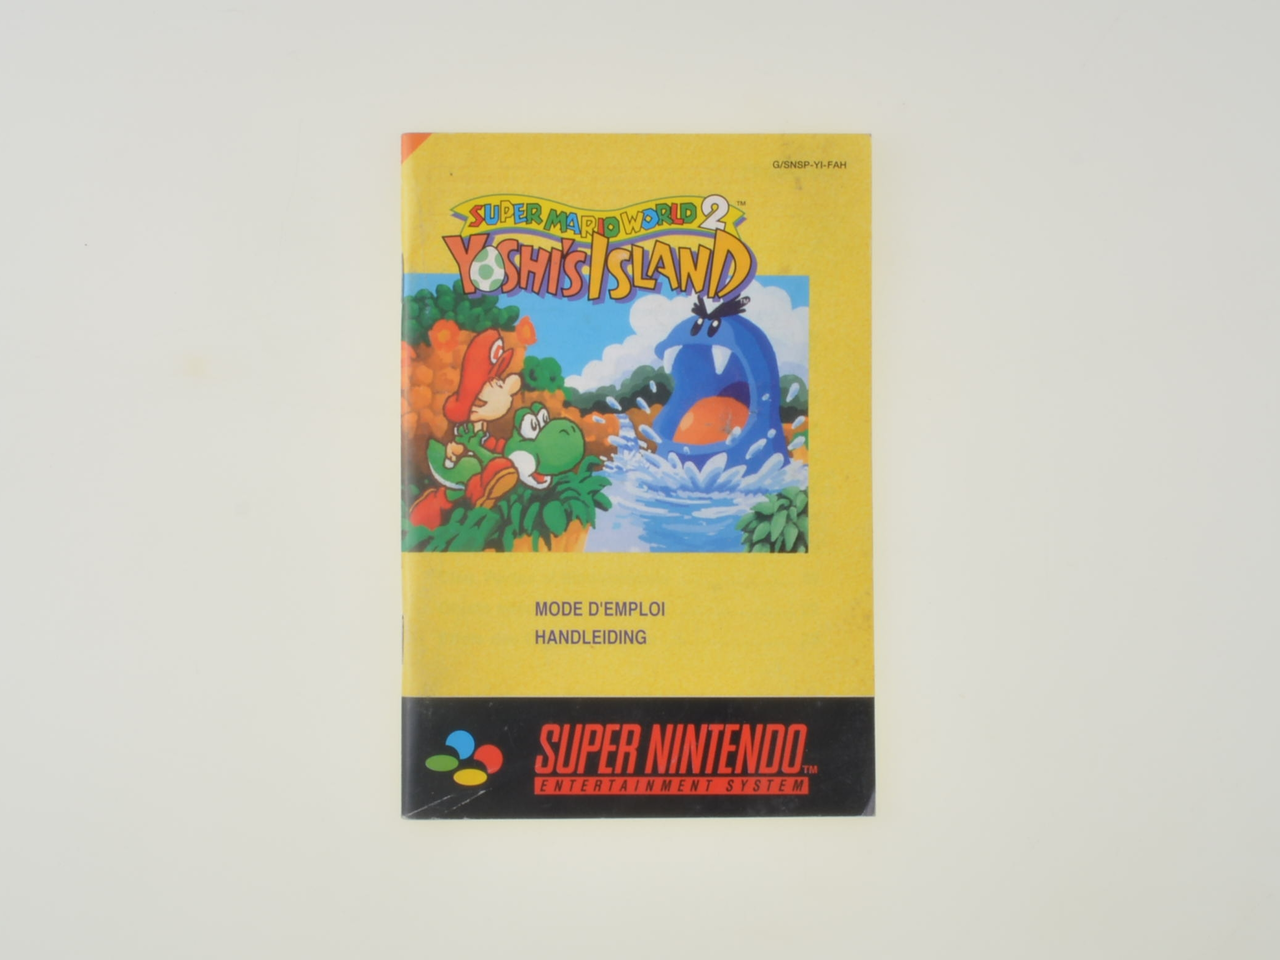 Super Mario World 2 - Yoshi's Island - Manual - Super Nintendo Manuals